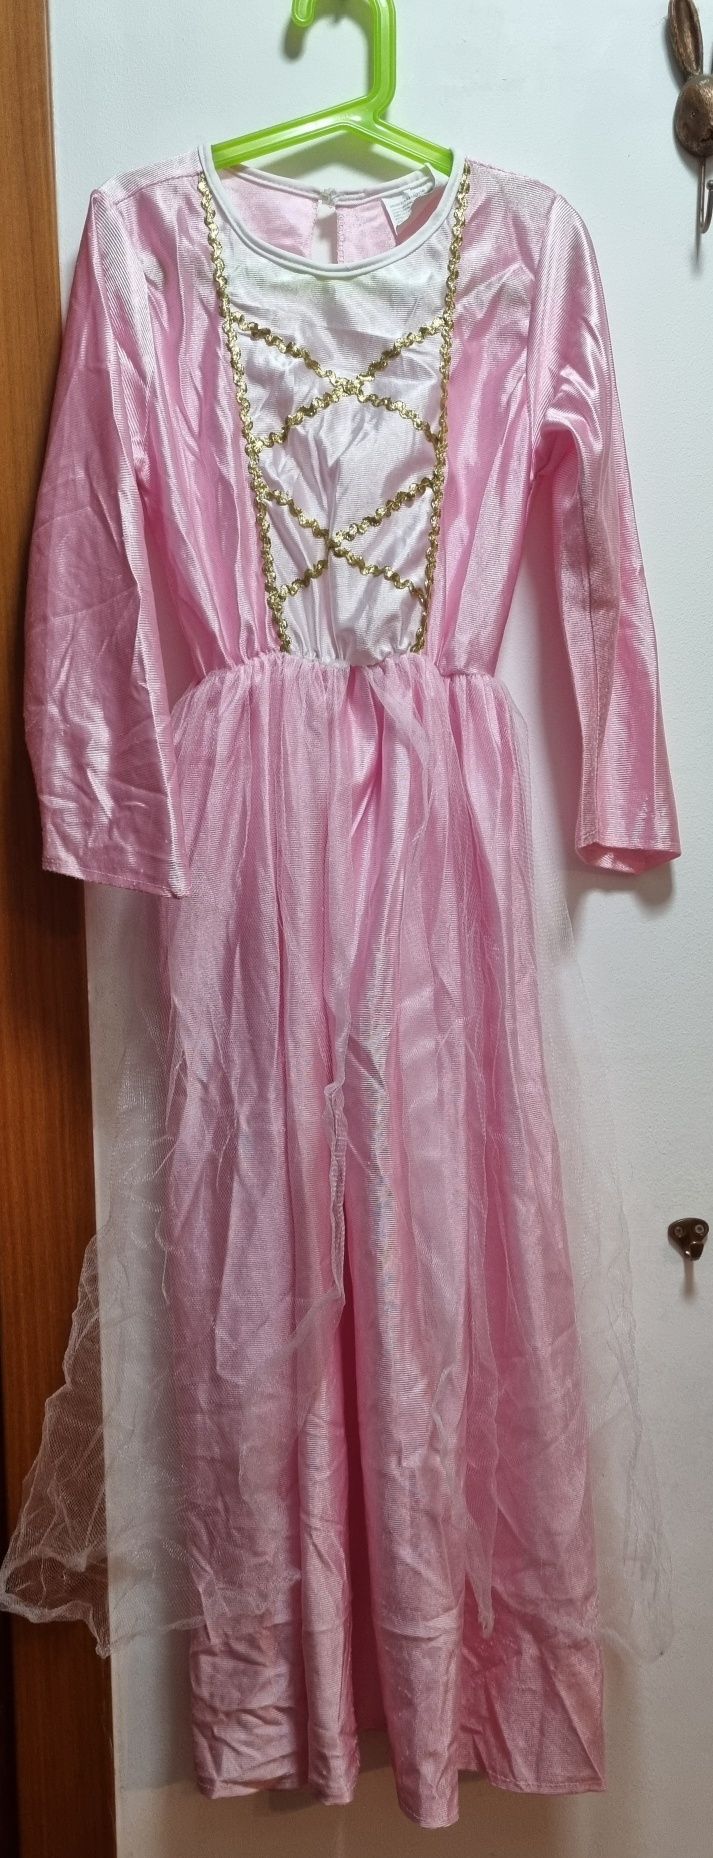 Disfarce vestido rosa - 10 anos